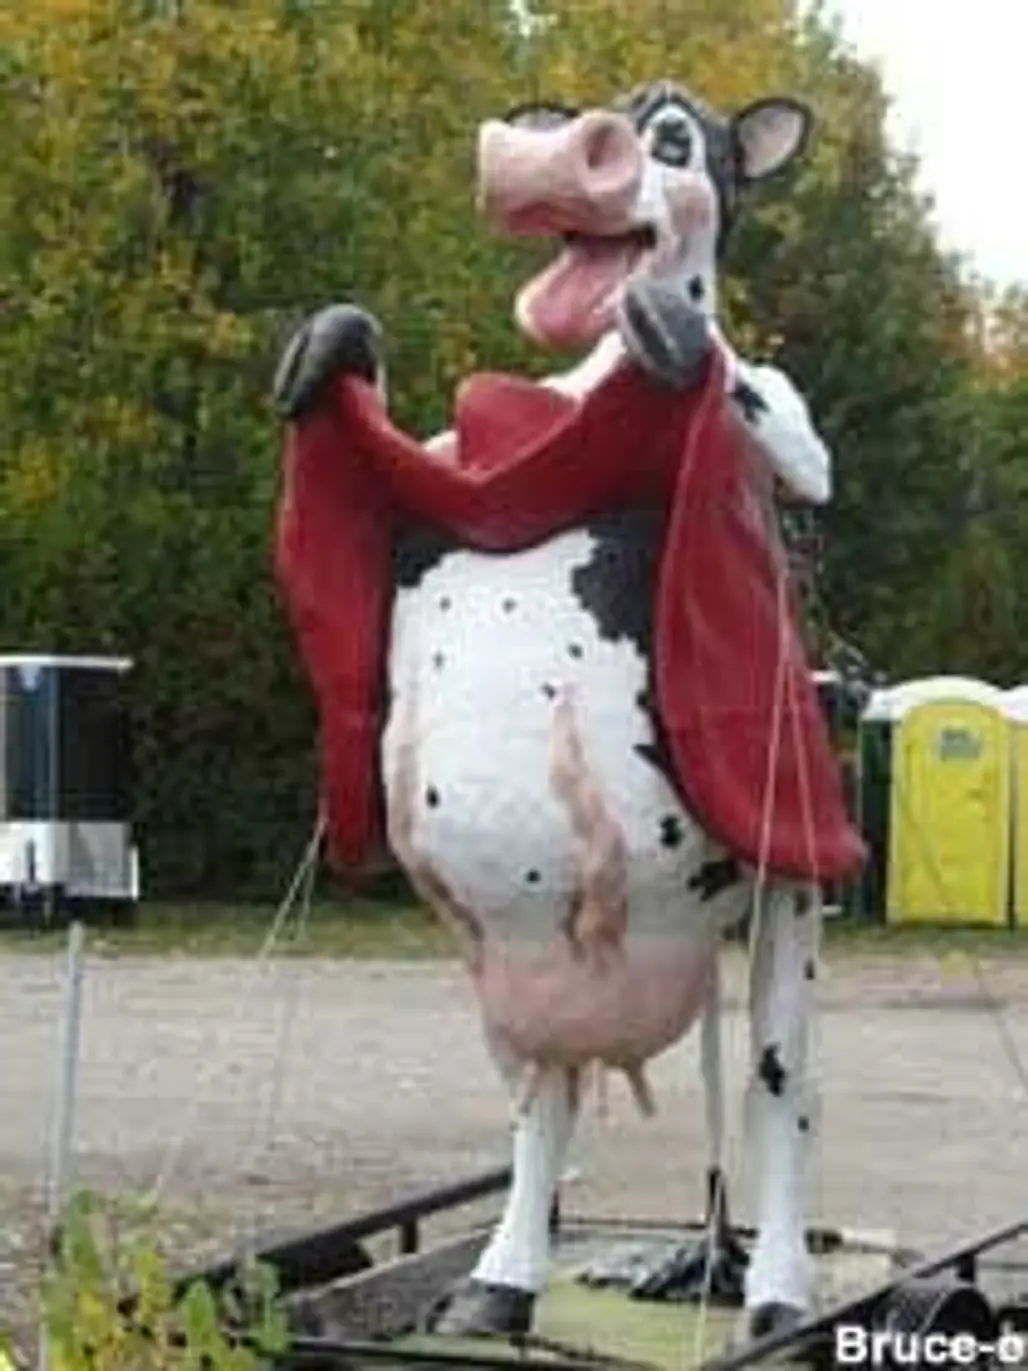 The Flashing Cow, Oshkosh, Wisconsin